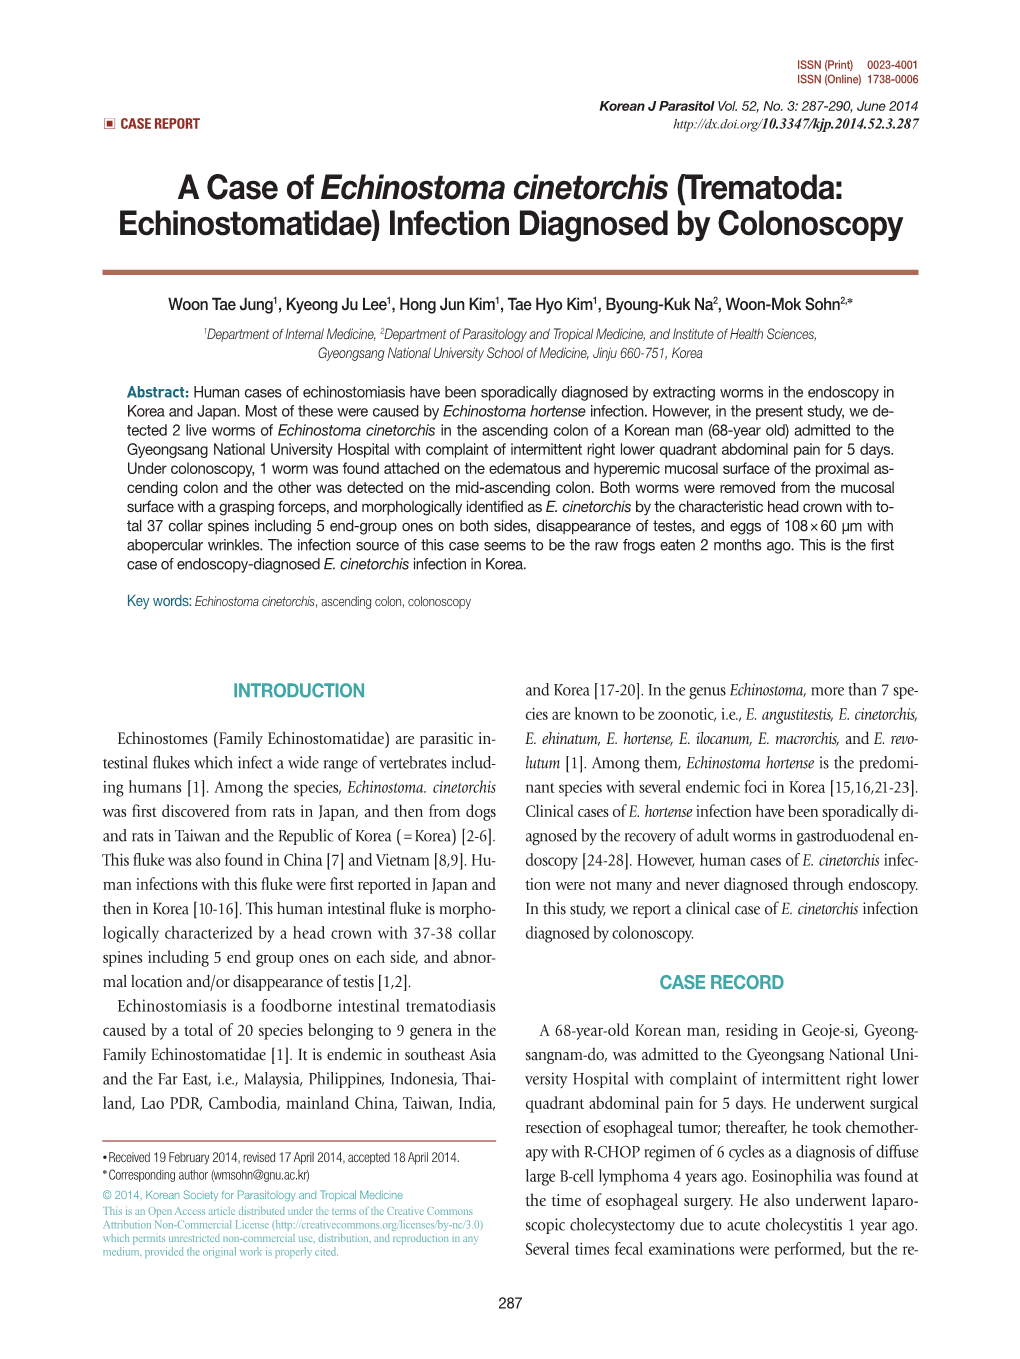 A Case of Echinostoma Cinetorchis (Trematoda: Echinostomatidae) Infection Diagnosed by Colonoscopy